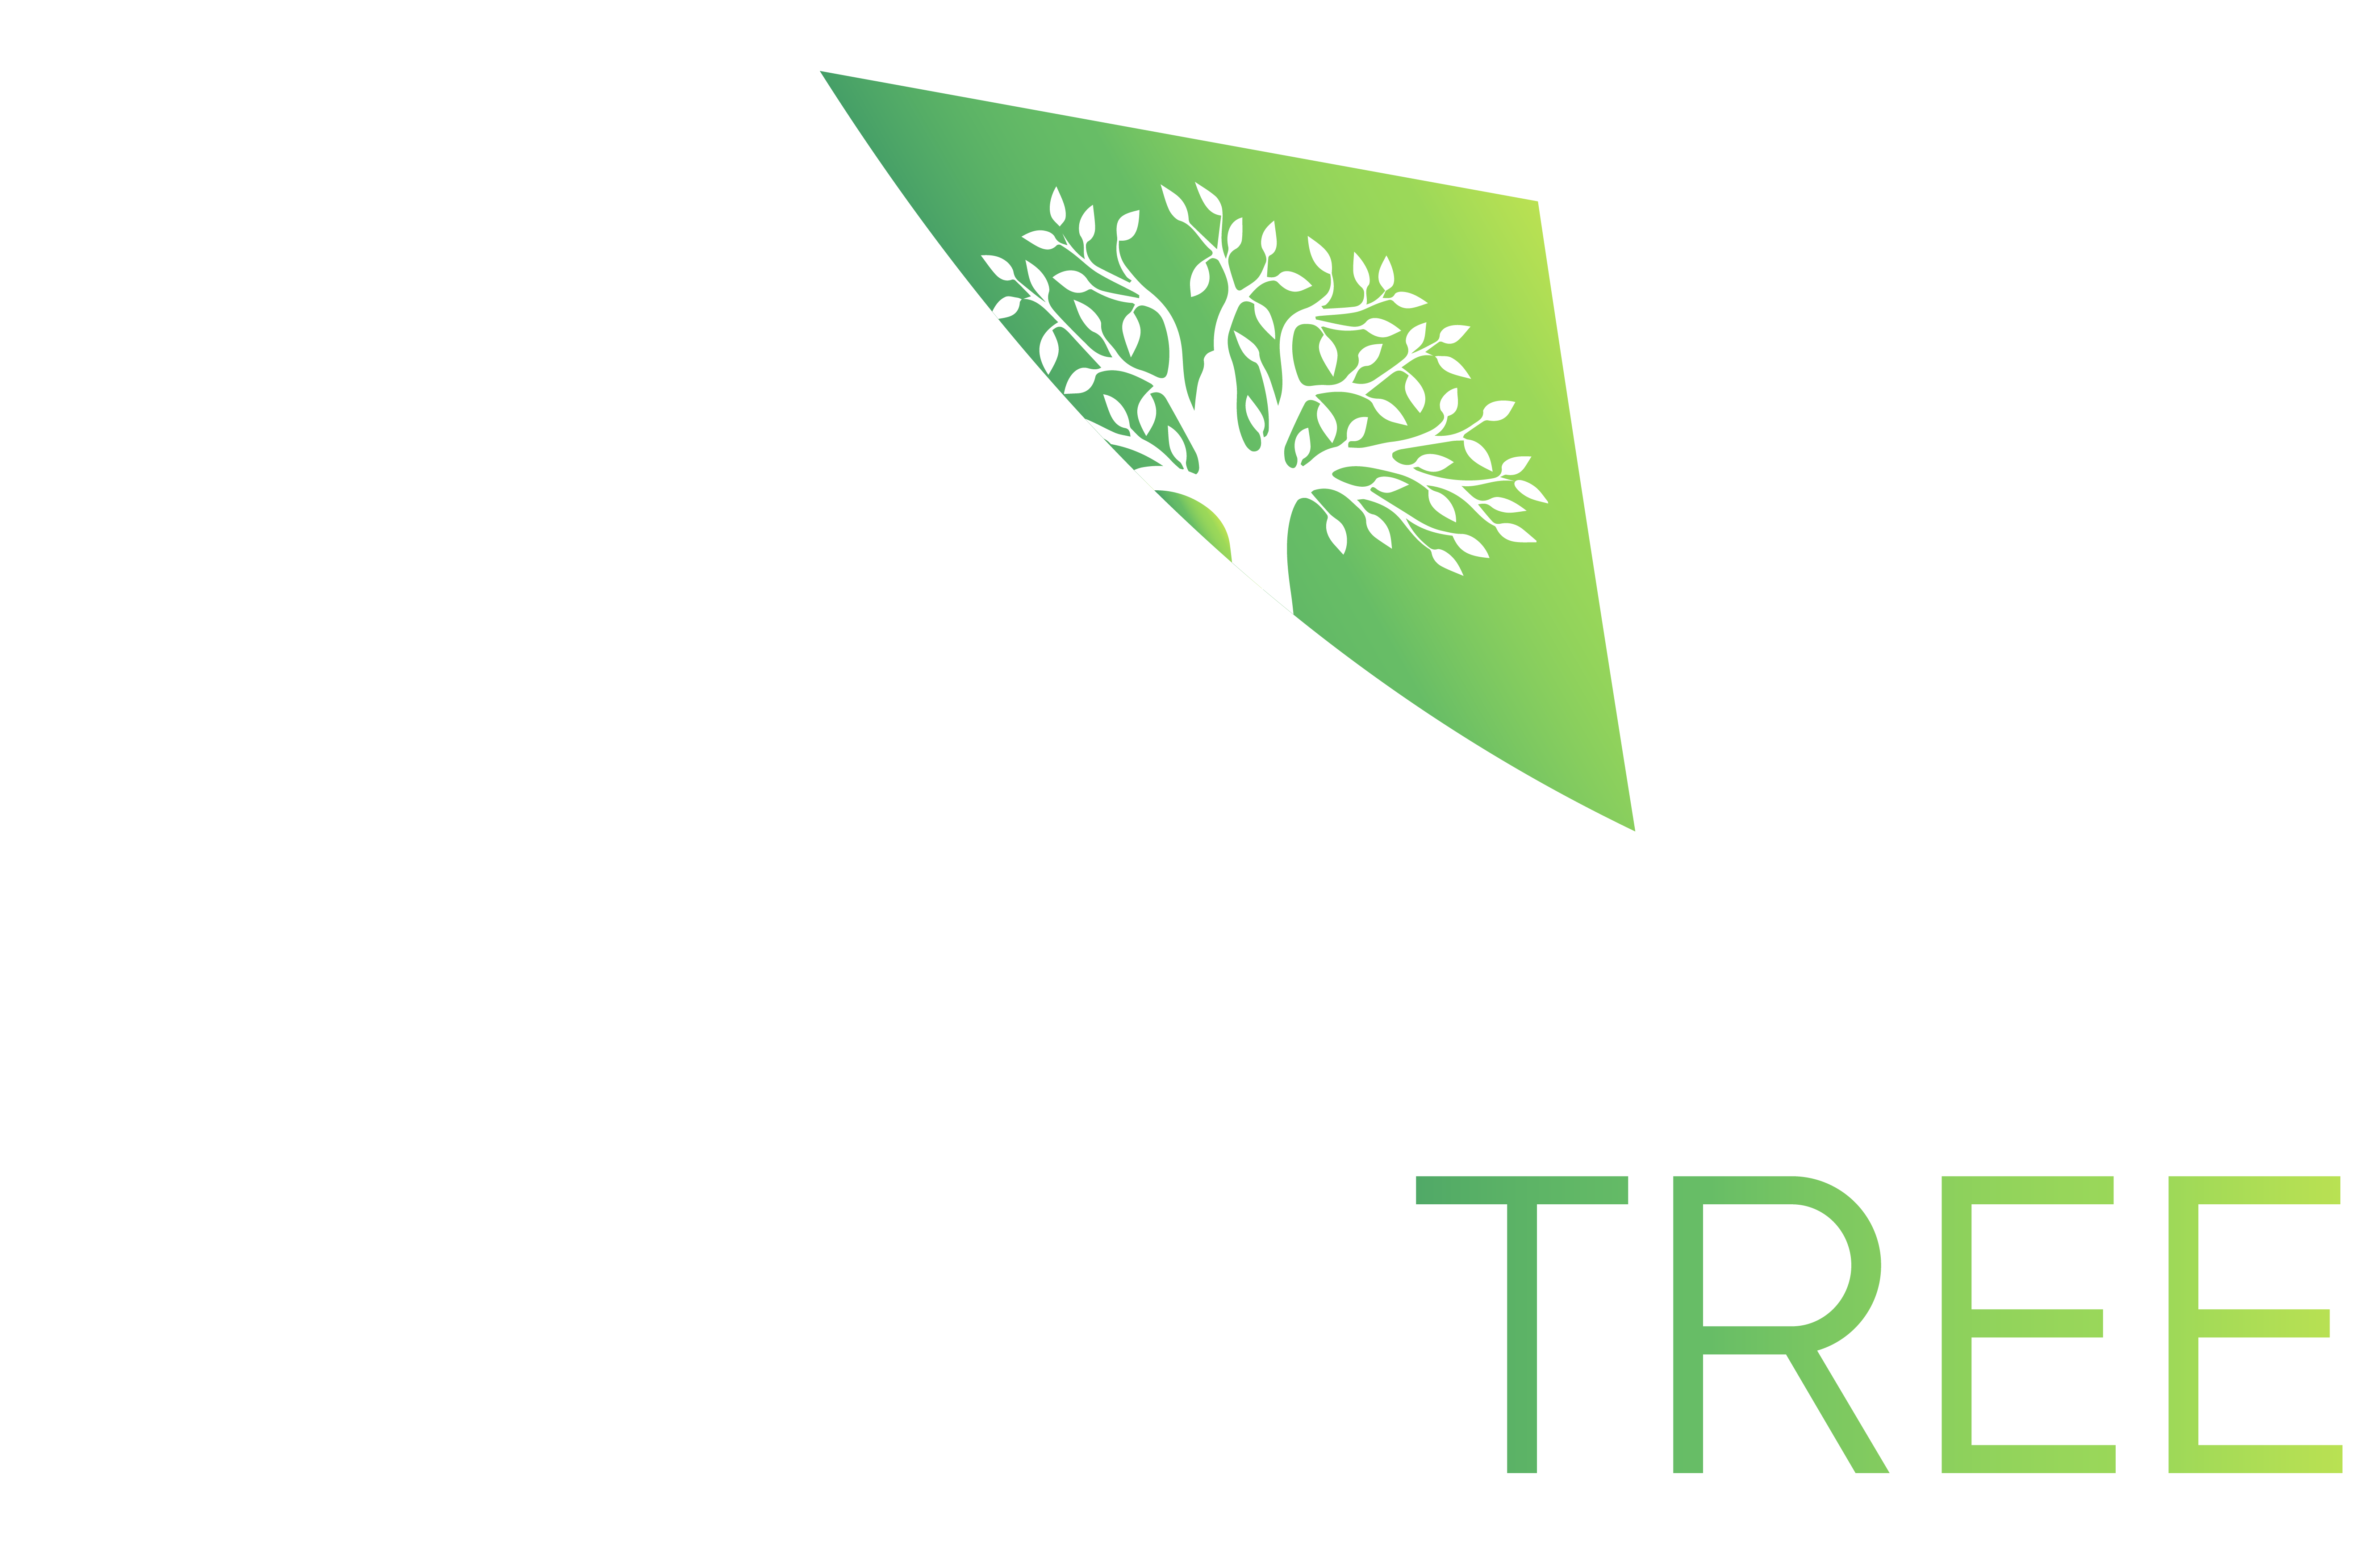 SolarTree